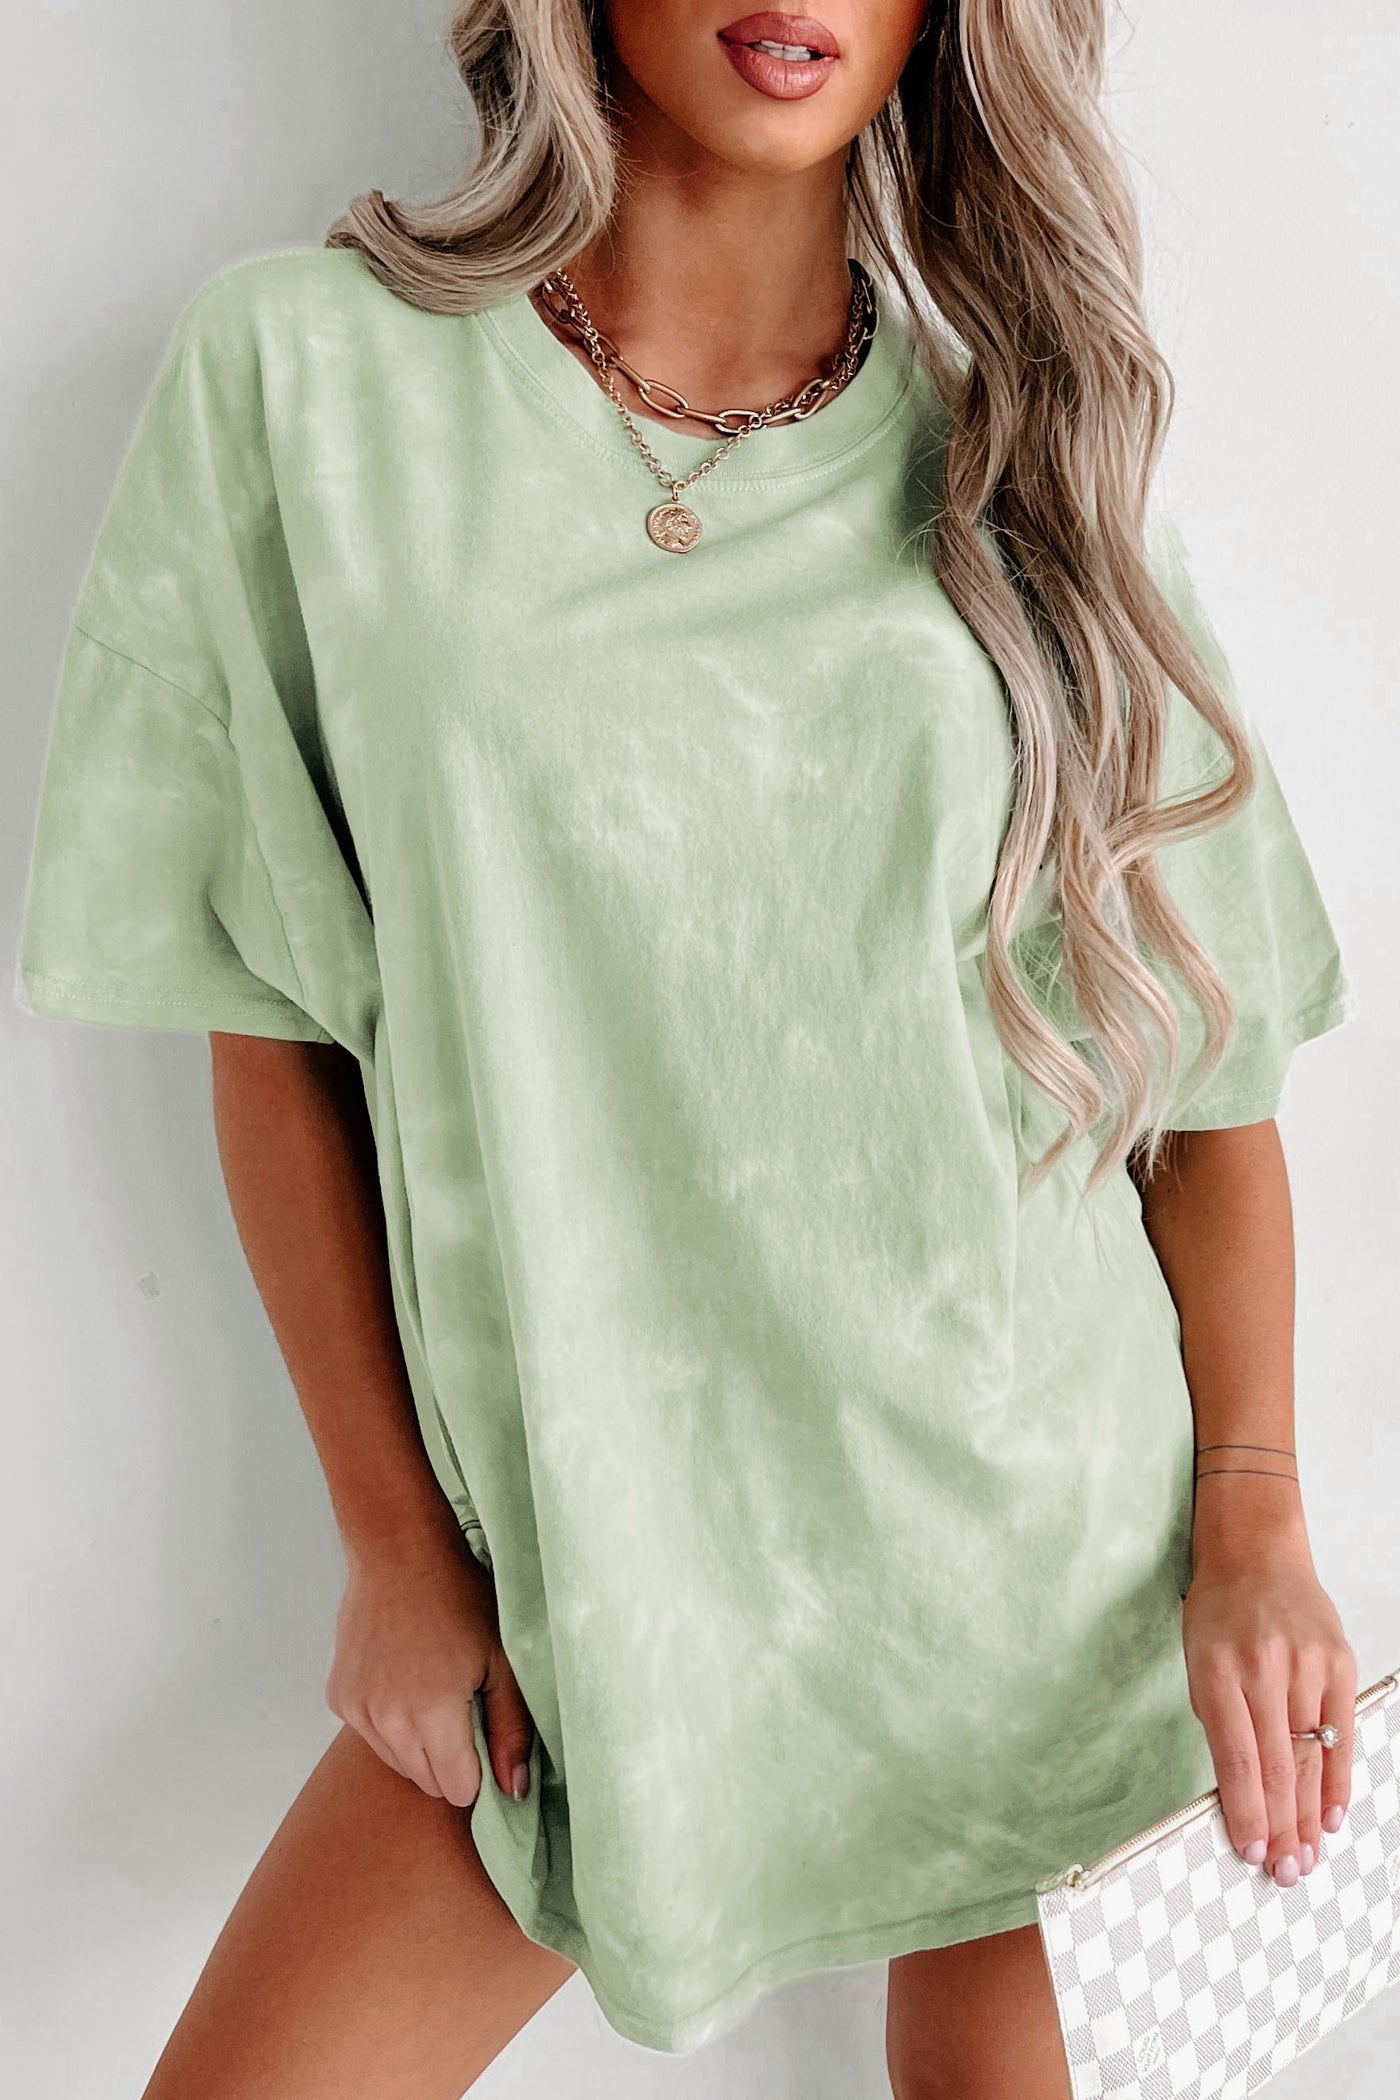 Oversized Tie-Dye T-Shirt With Distressing (Pastel Green) - NanaMacs